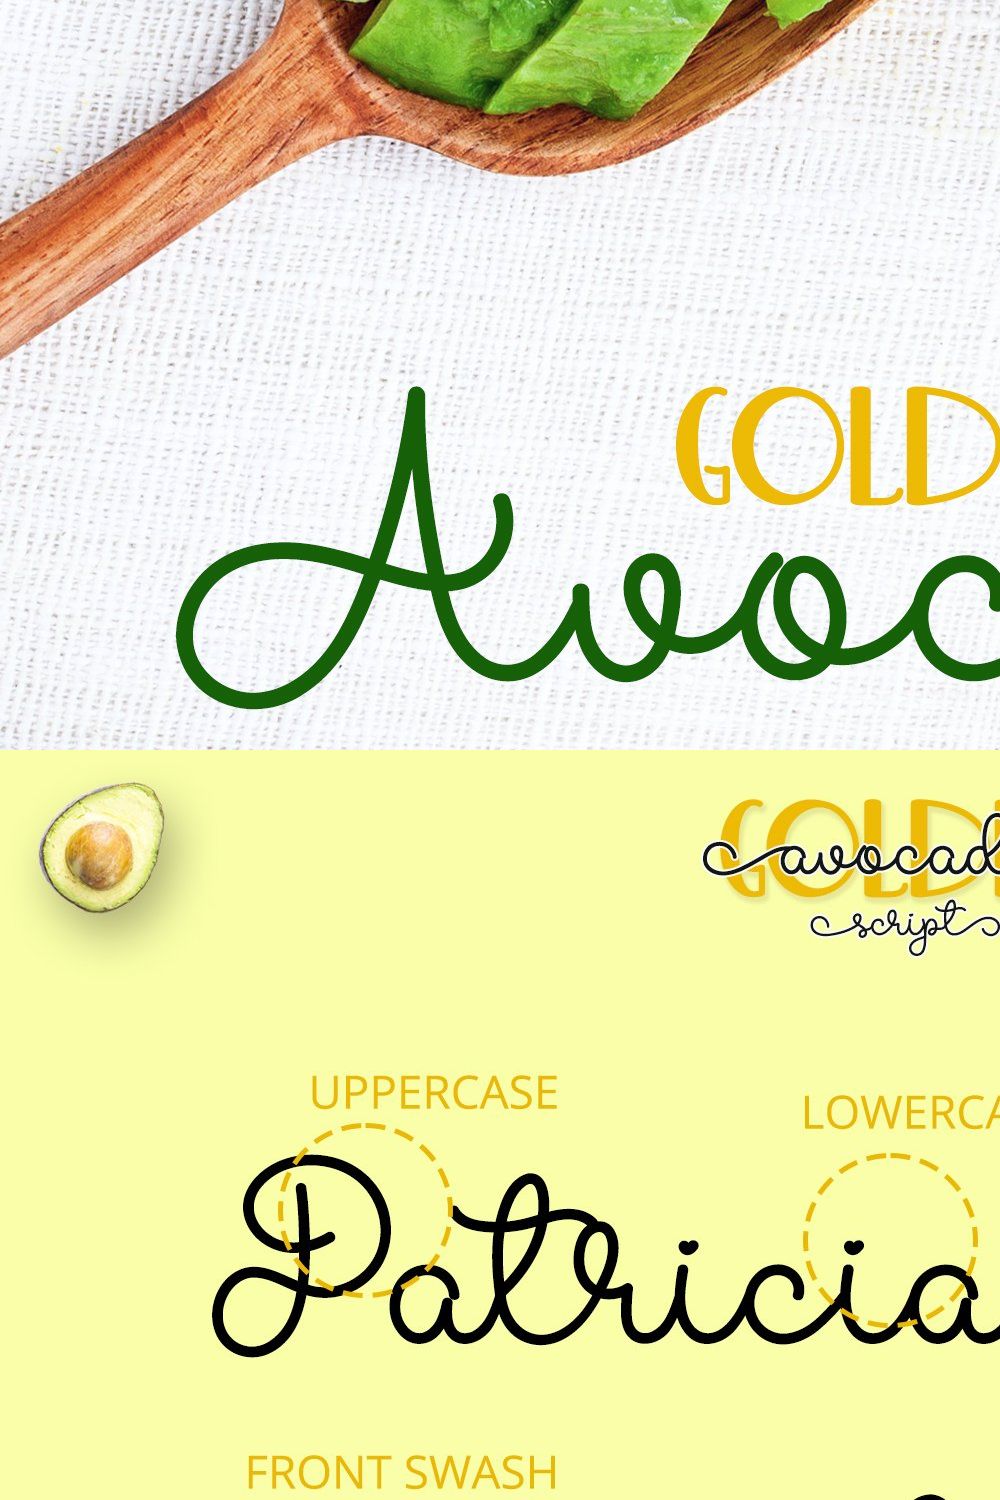 Golden Avocado - Fun Font Duo pinterest preview image.